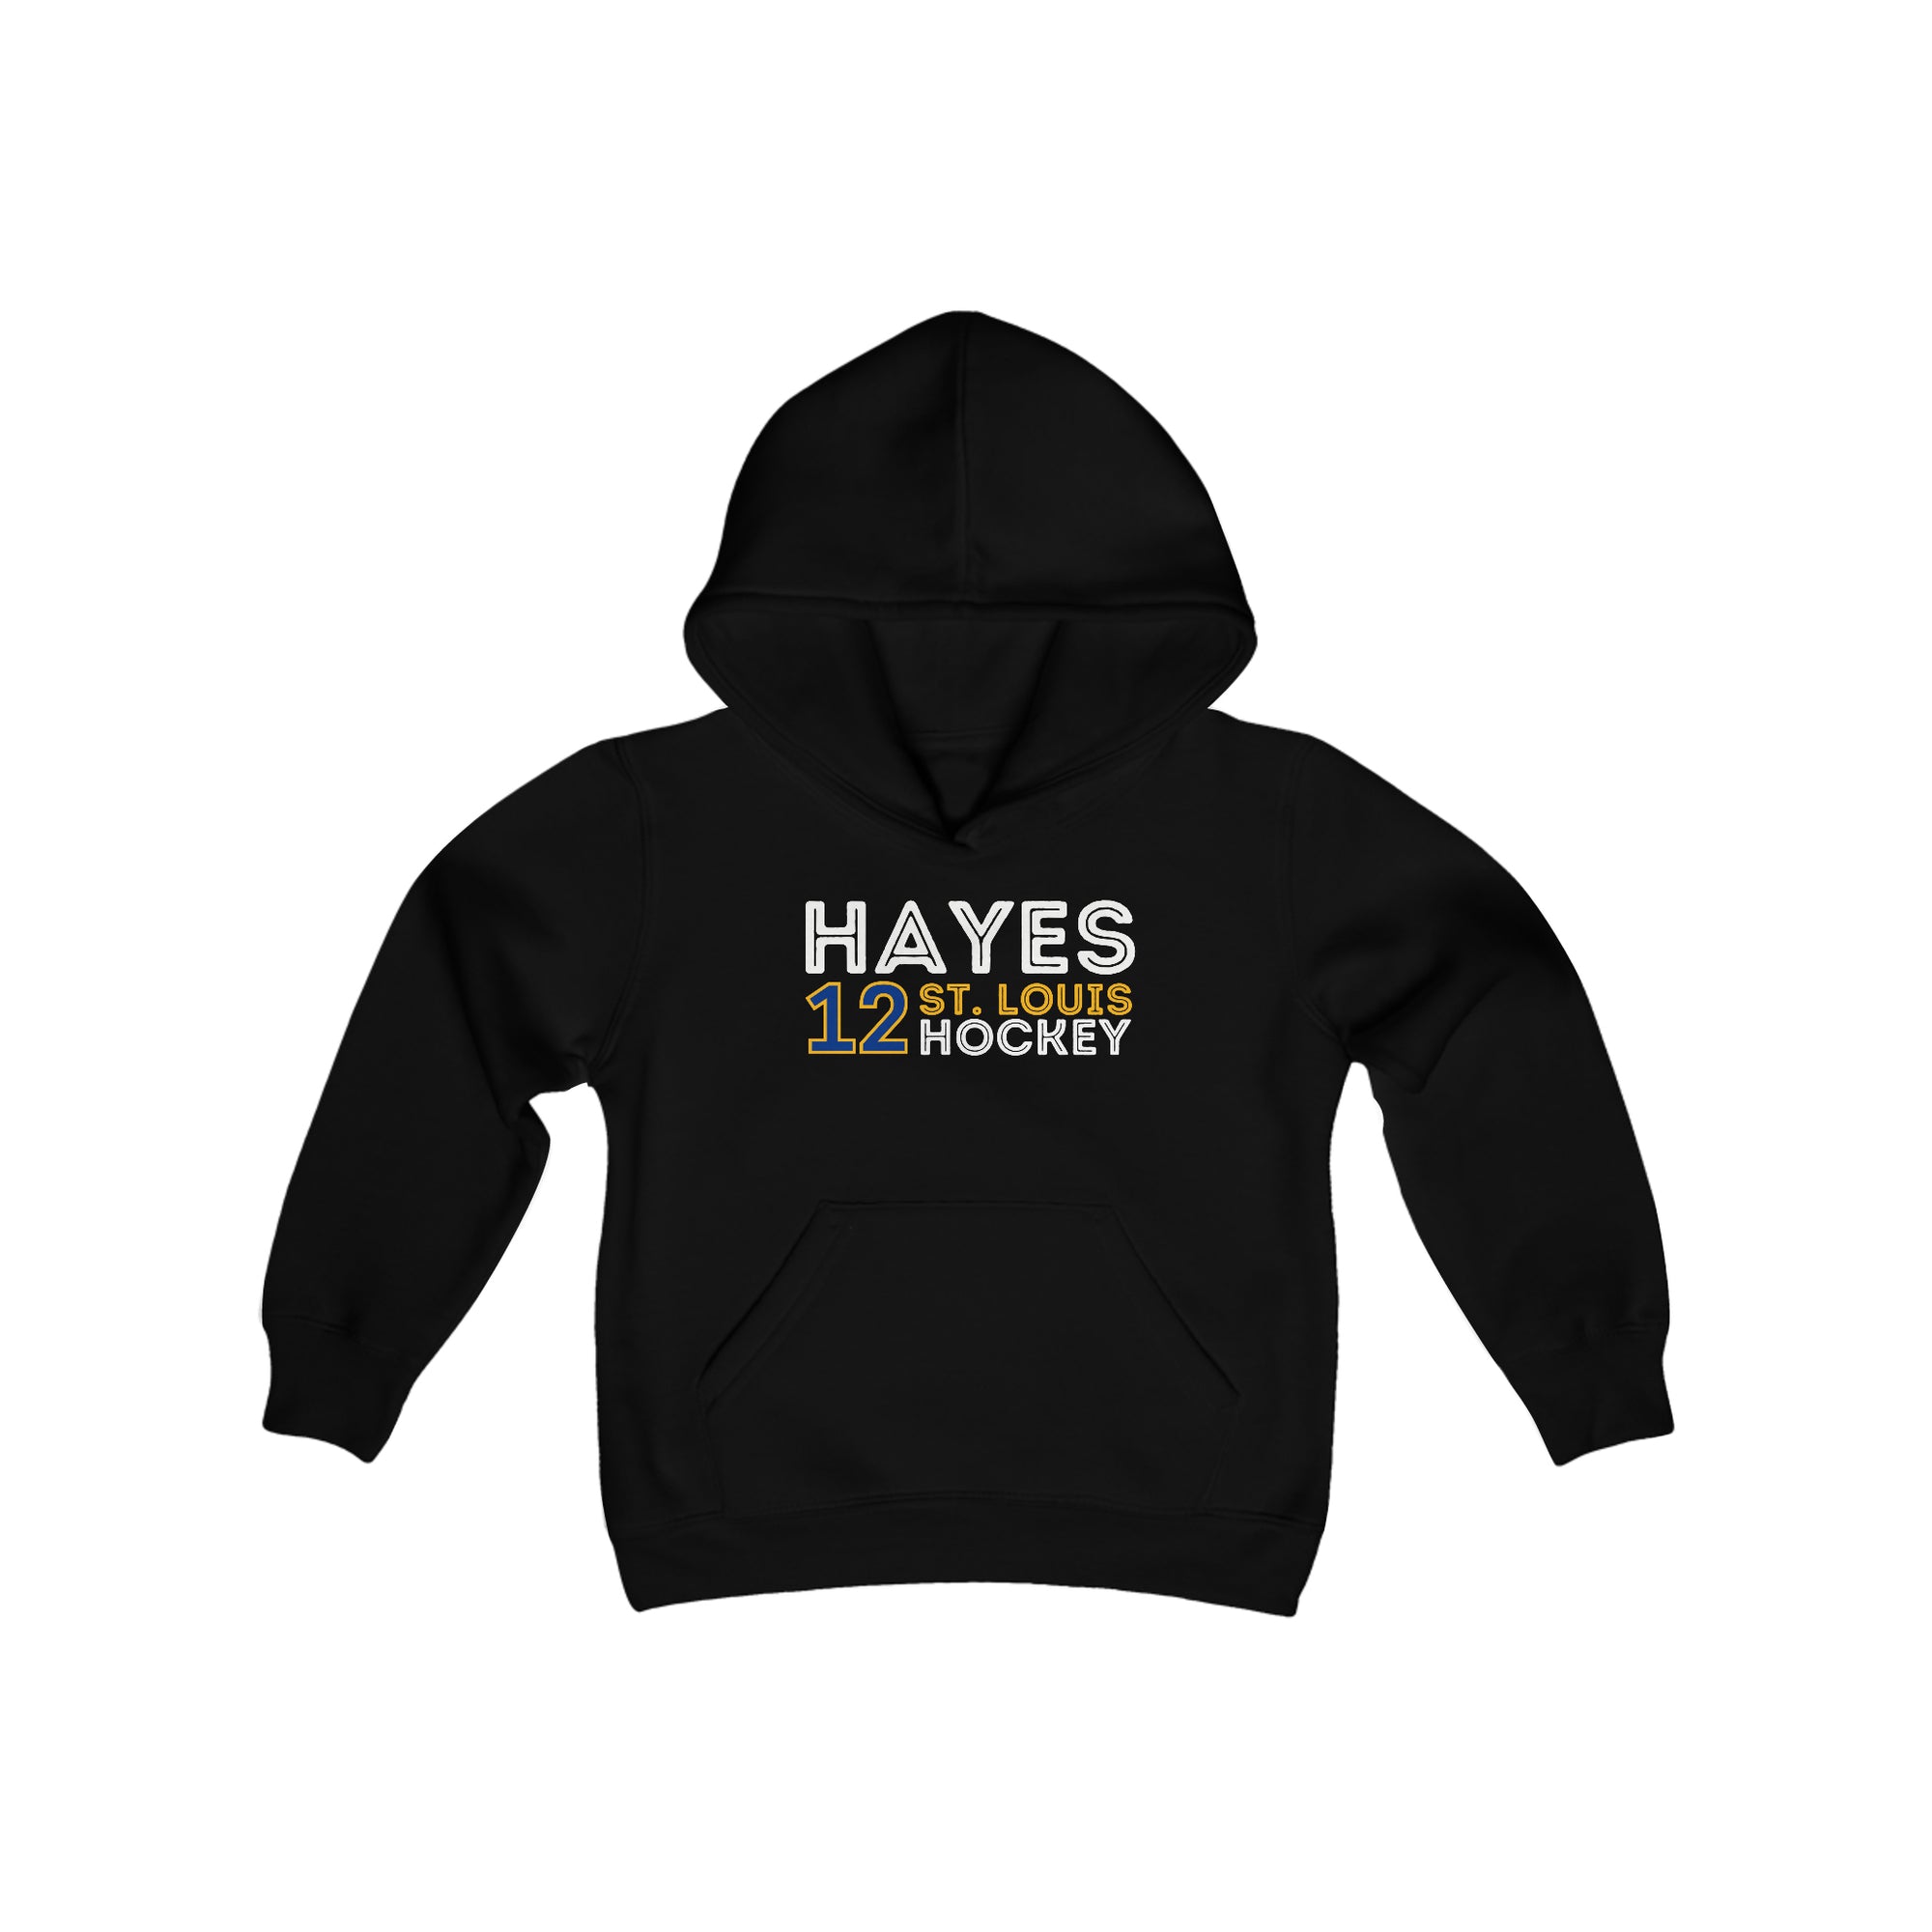 Hayes 12 St. Louis Hockey Grafitti Wall Design Youth Hooded Sweatshirt